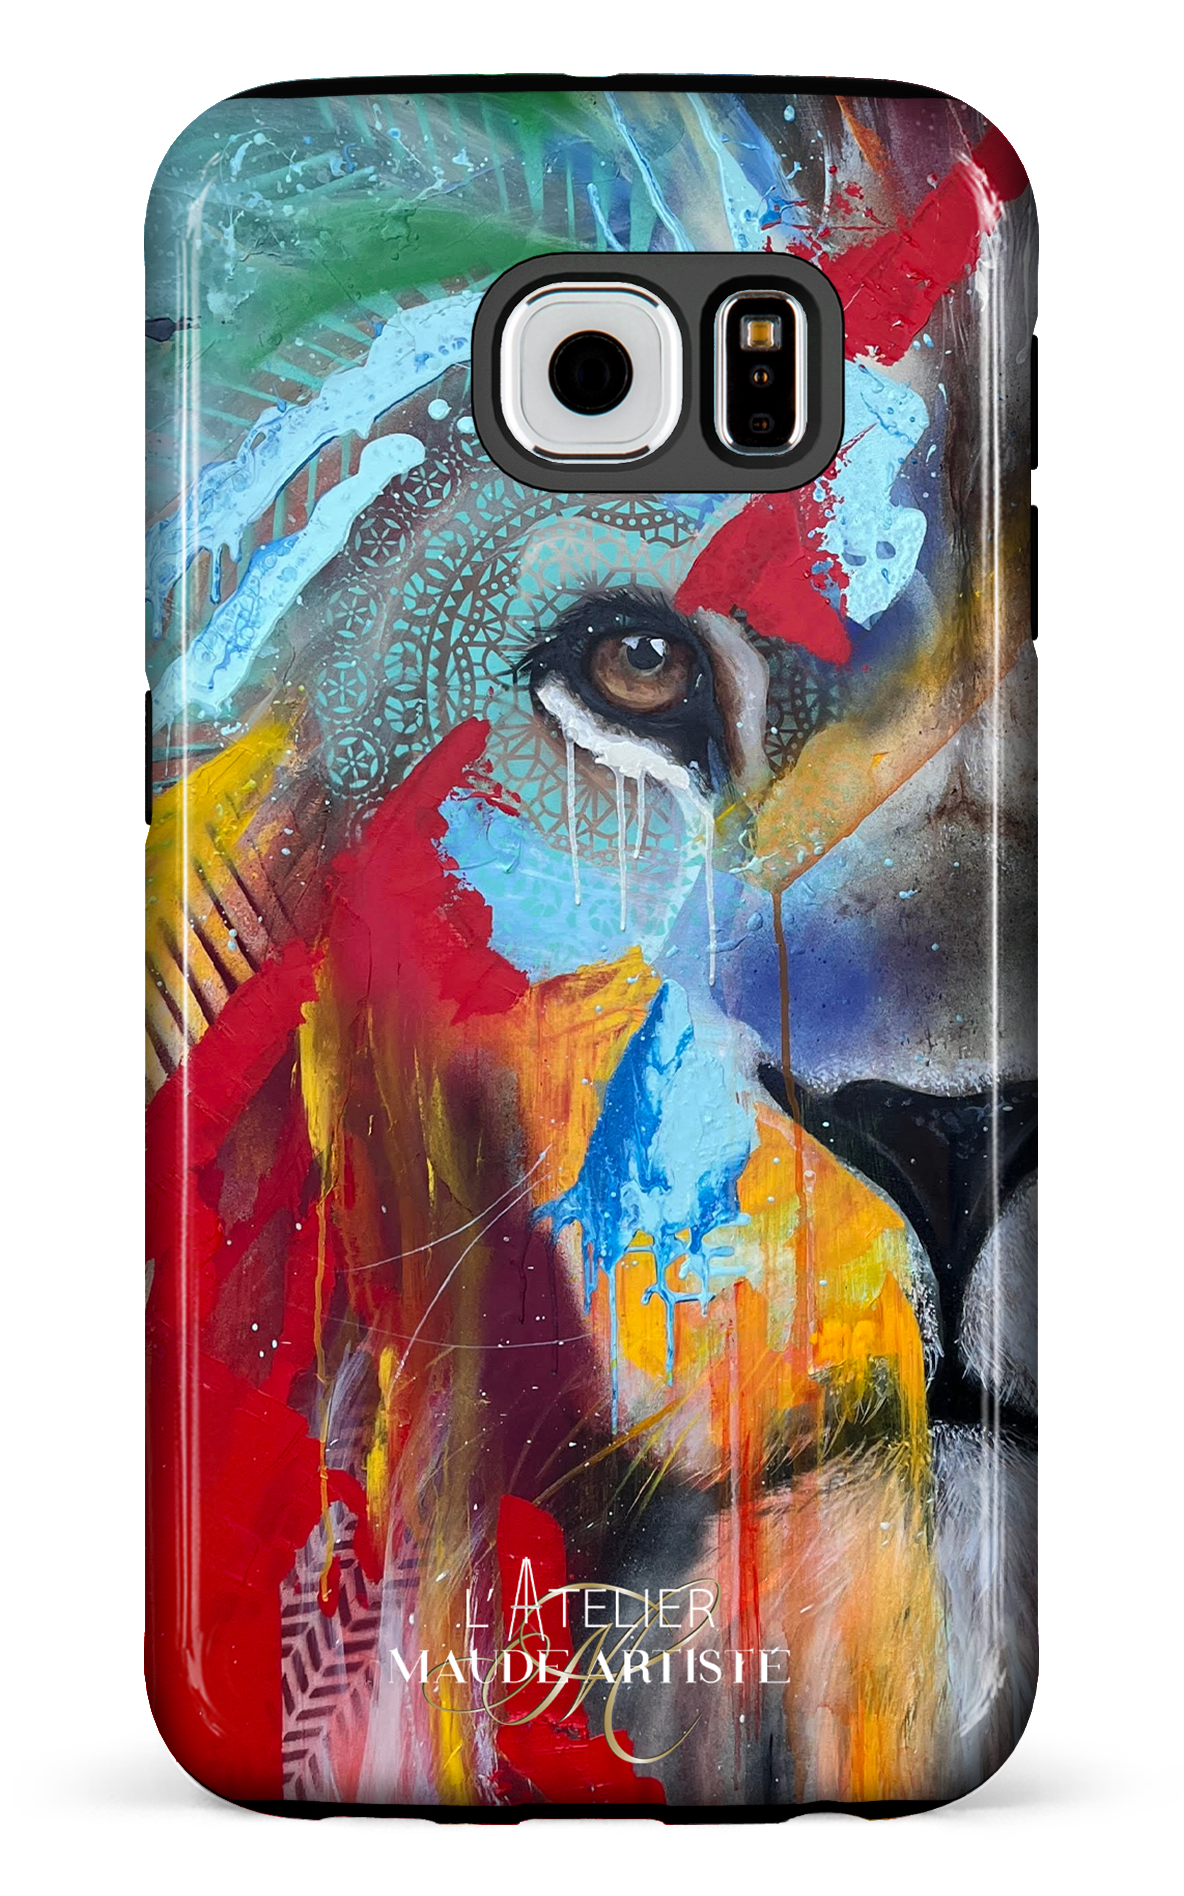 A - Phone Case - Template - Galaxy S6